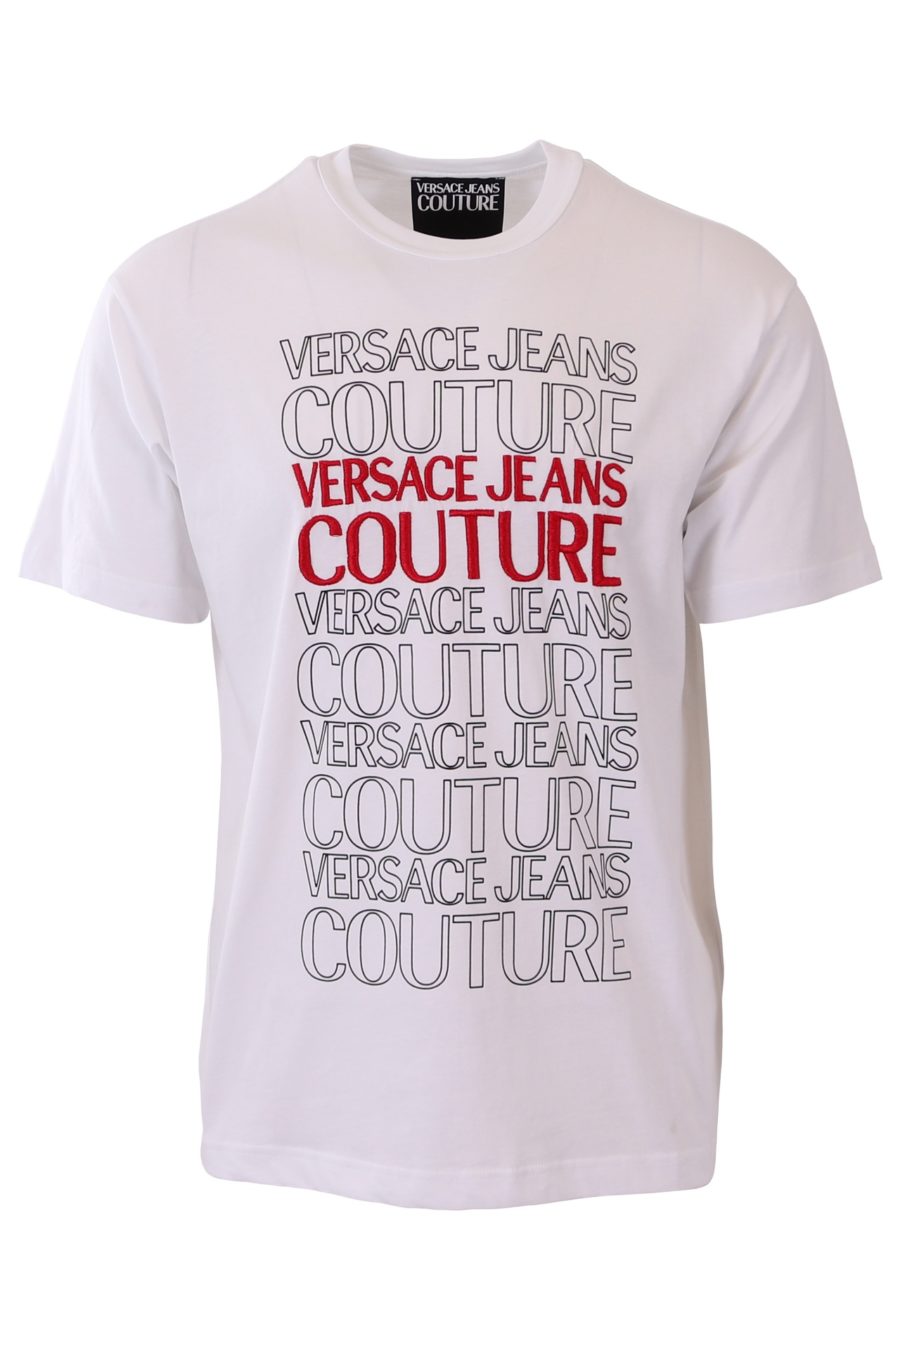 T-shirt Versace Jeans Couture blanc logo brodé rouge - 958fd534341f8764bf8e7a410d7313a831426aeb